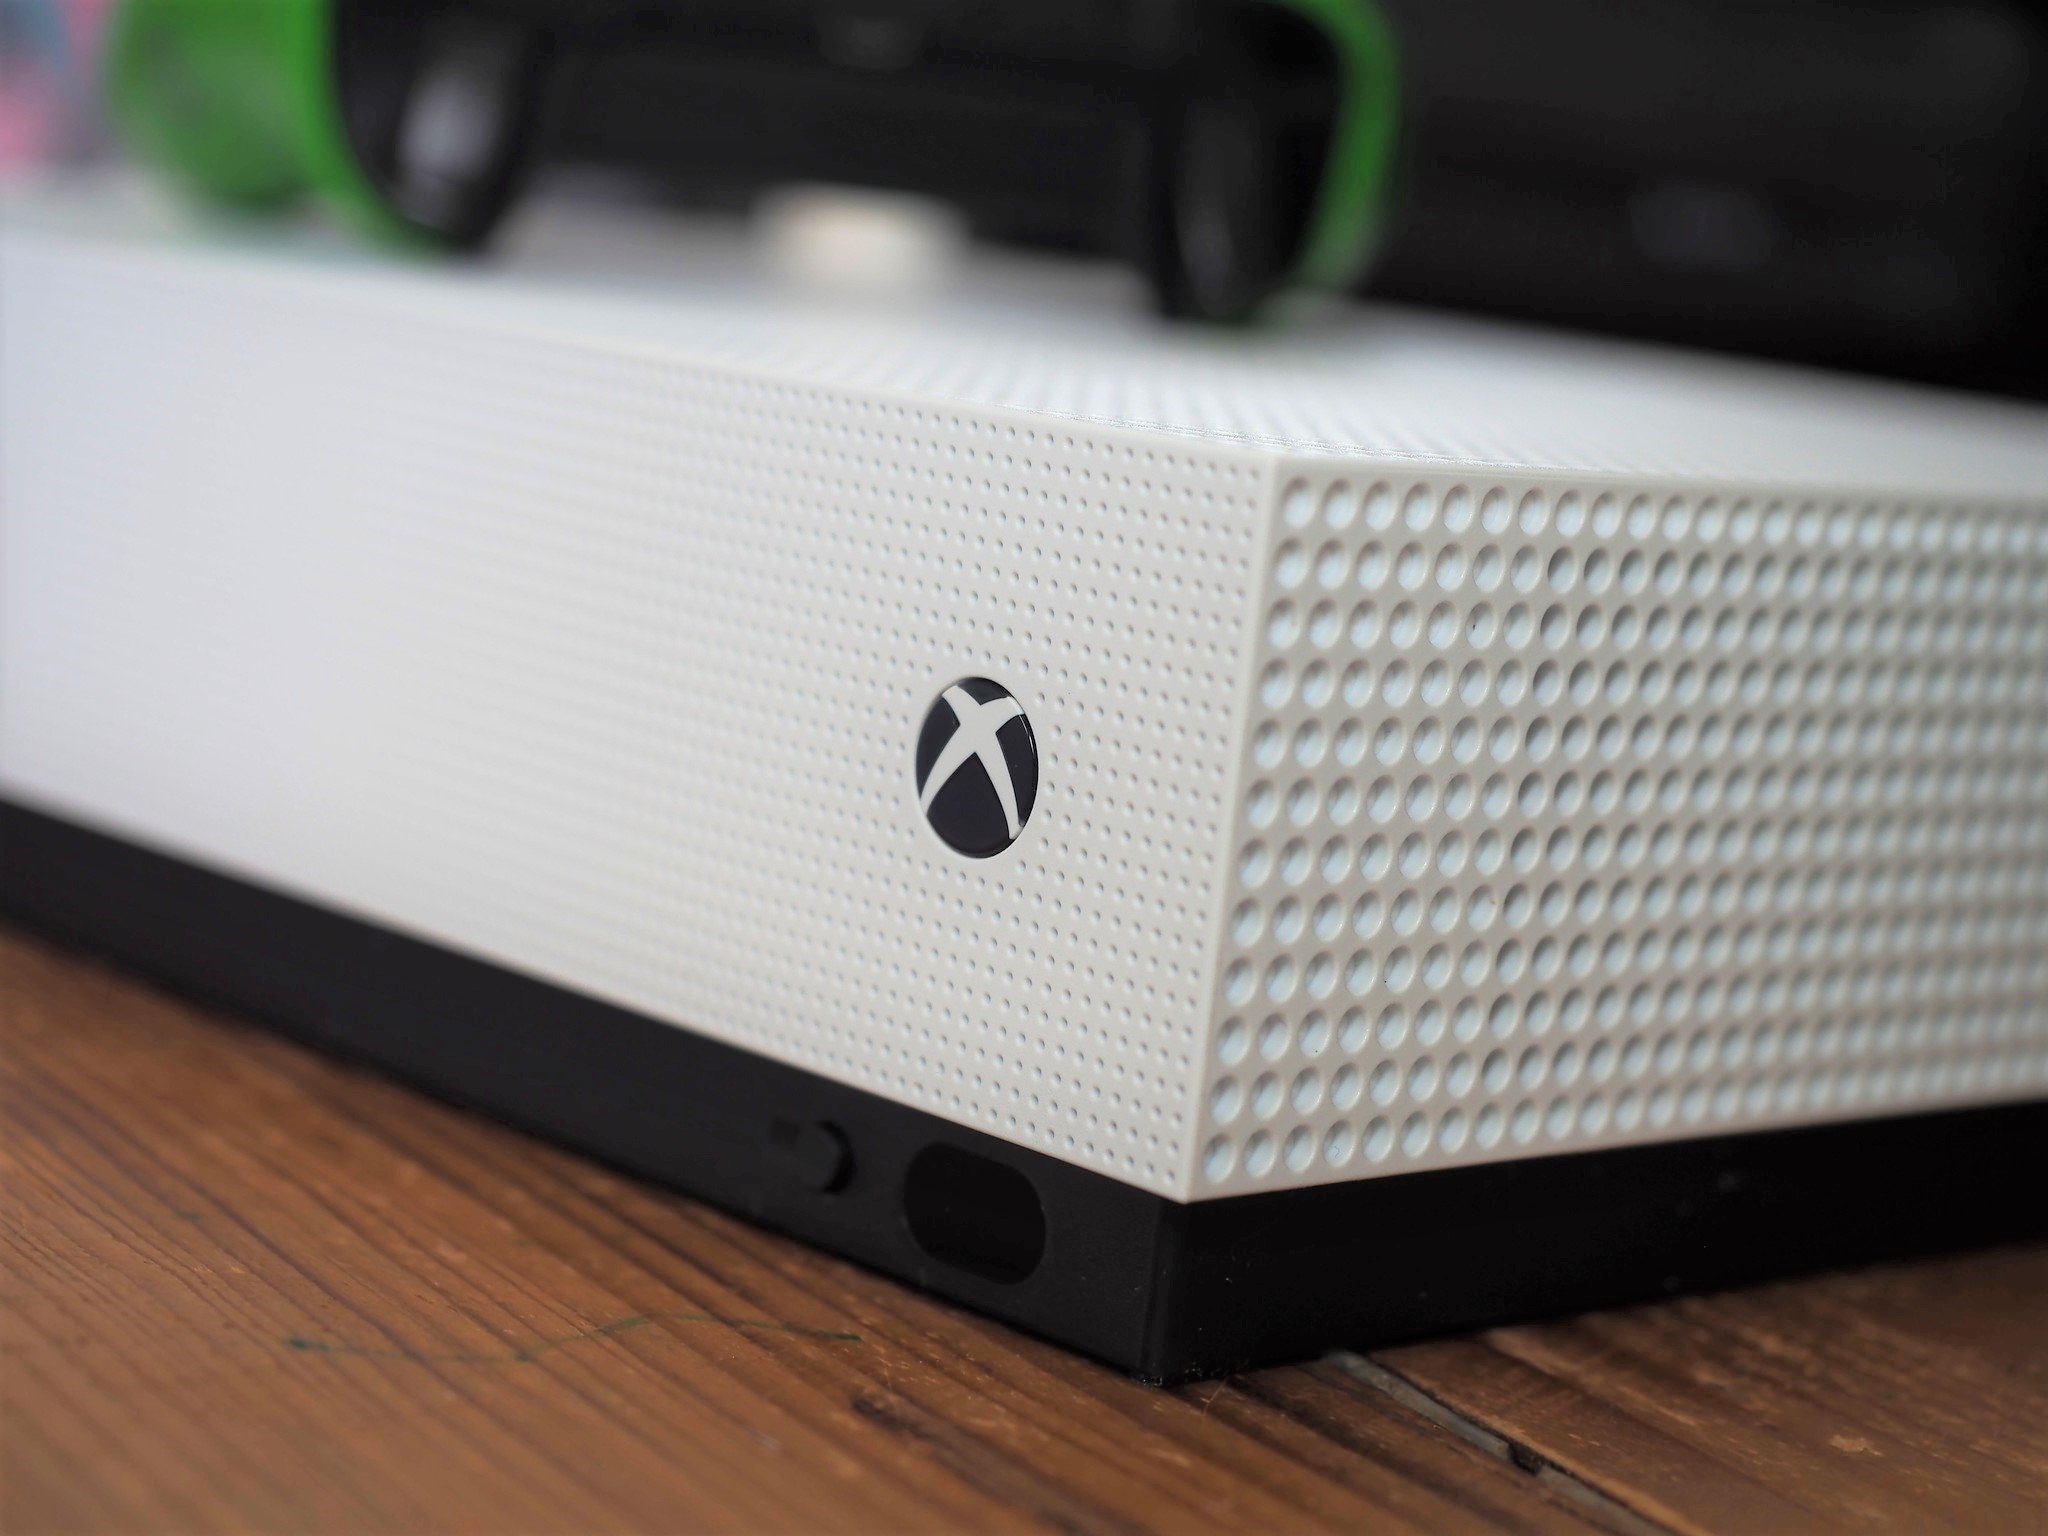 Instrueren Struikelen voetstuk Does the Xbox One S support 4K UHD gaming? | Windows Central